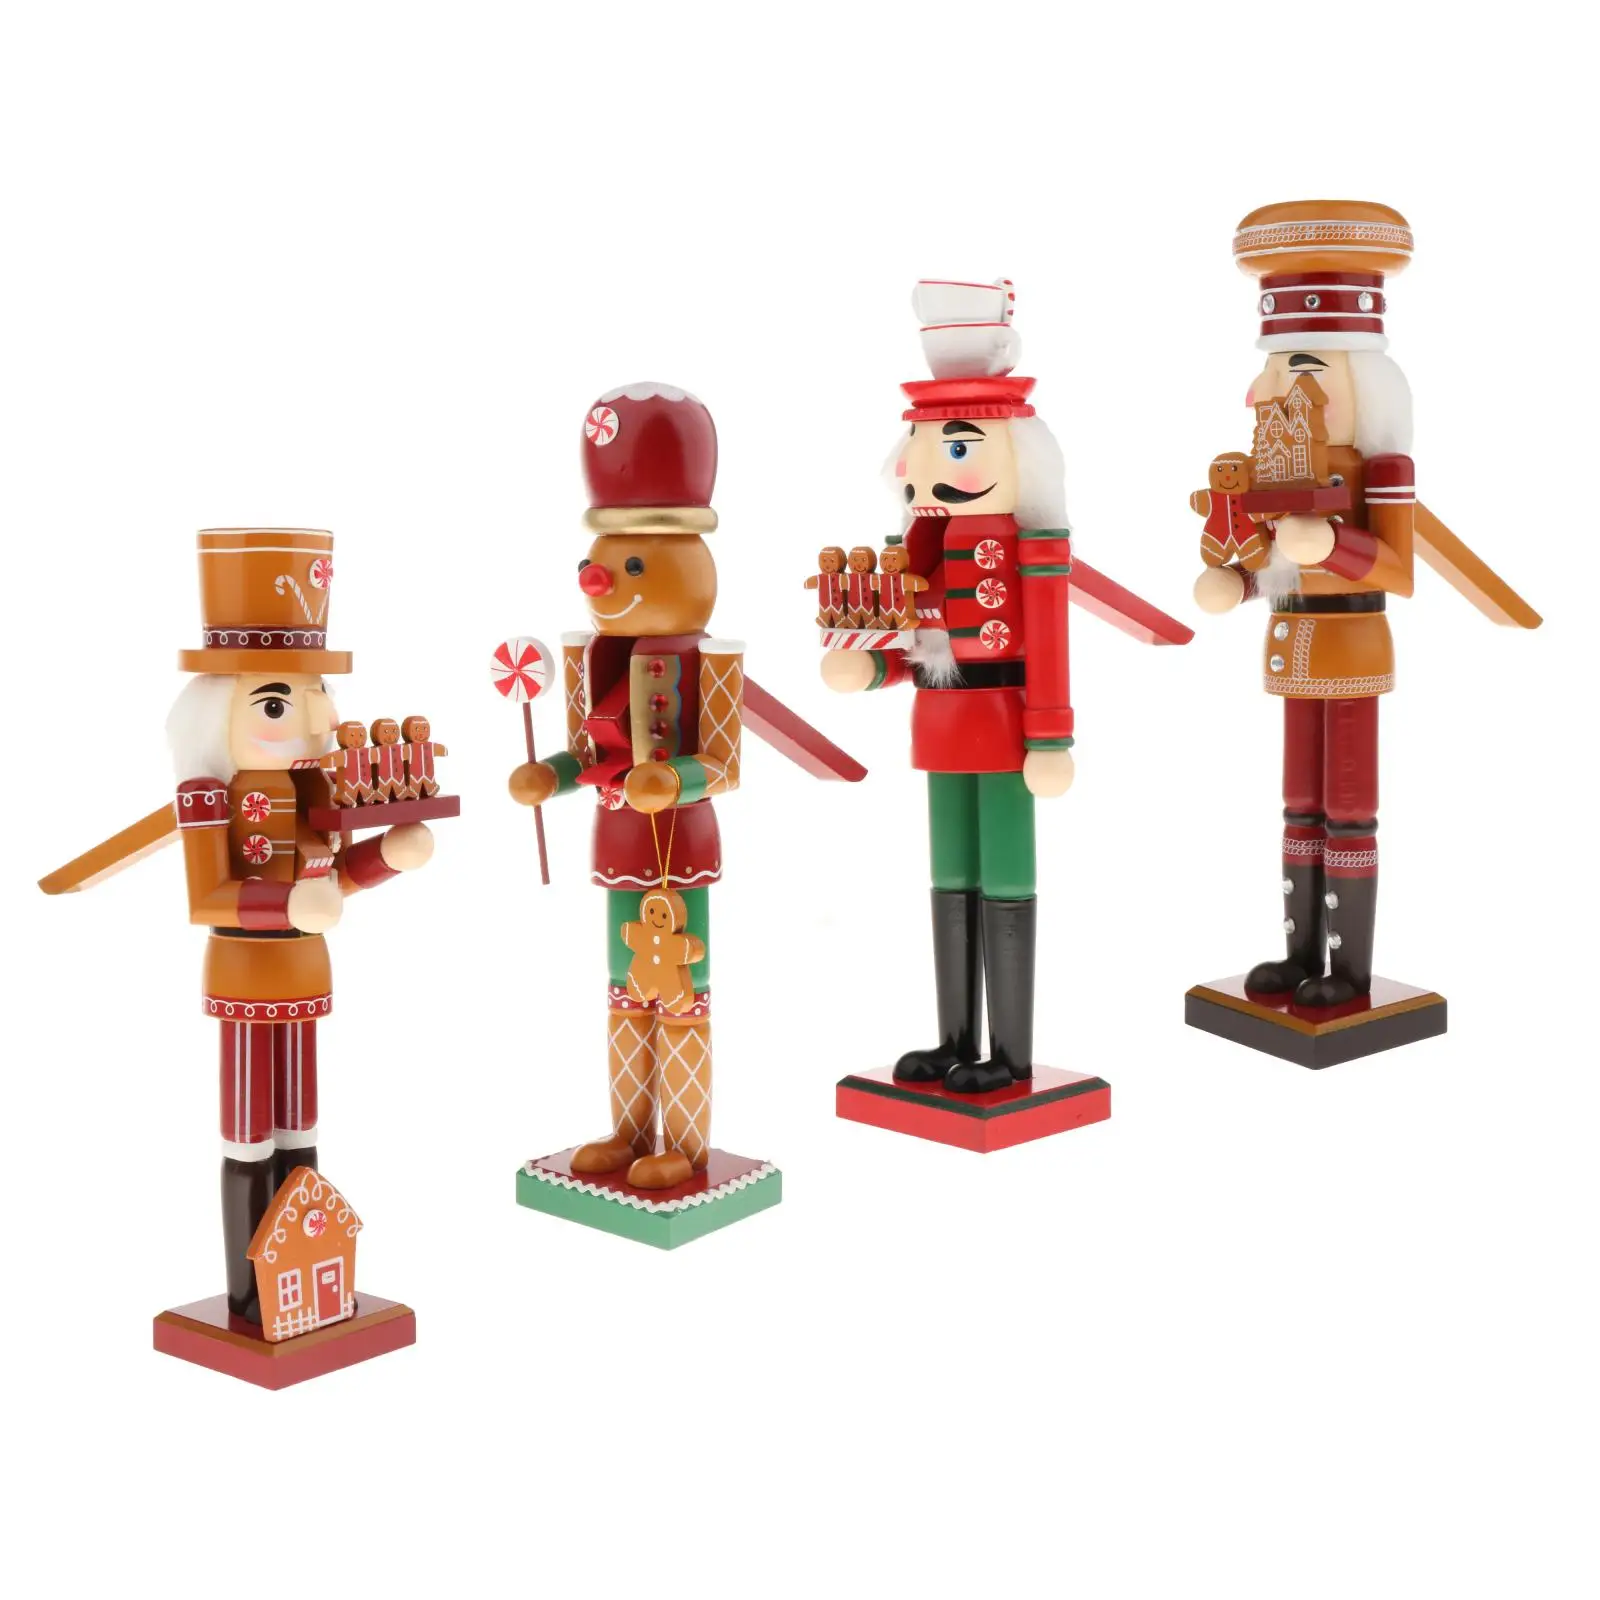 Wooden Nutcracker Soldier Figurines Ornaments 36CM Nutcracker Puppet Dolls Desktop Crafts Kids Gifts Christmas Decorations